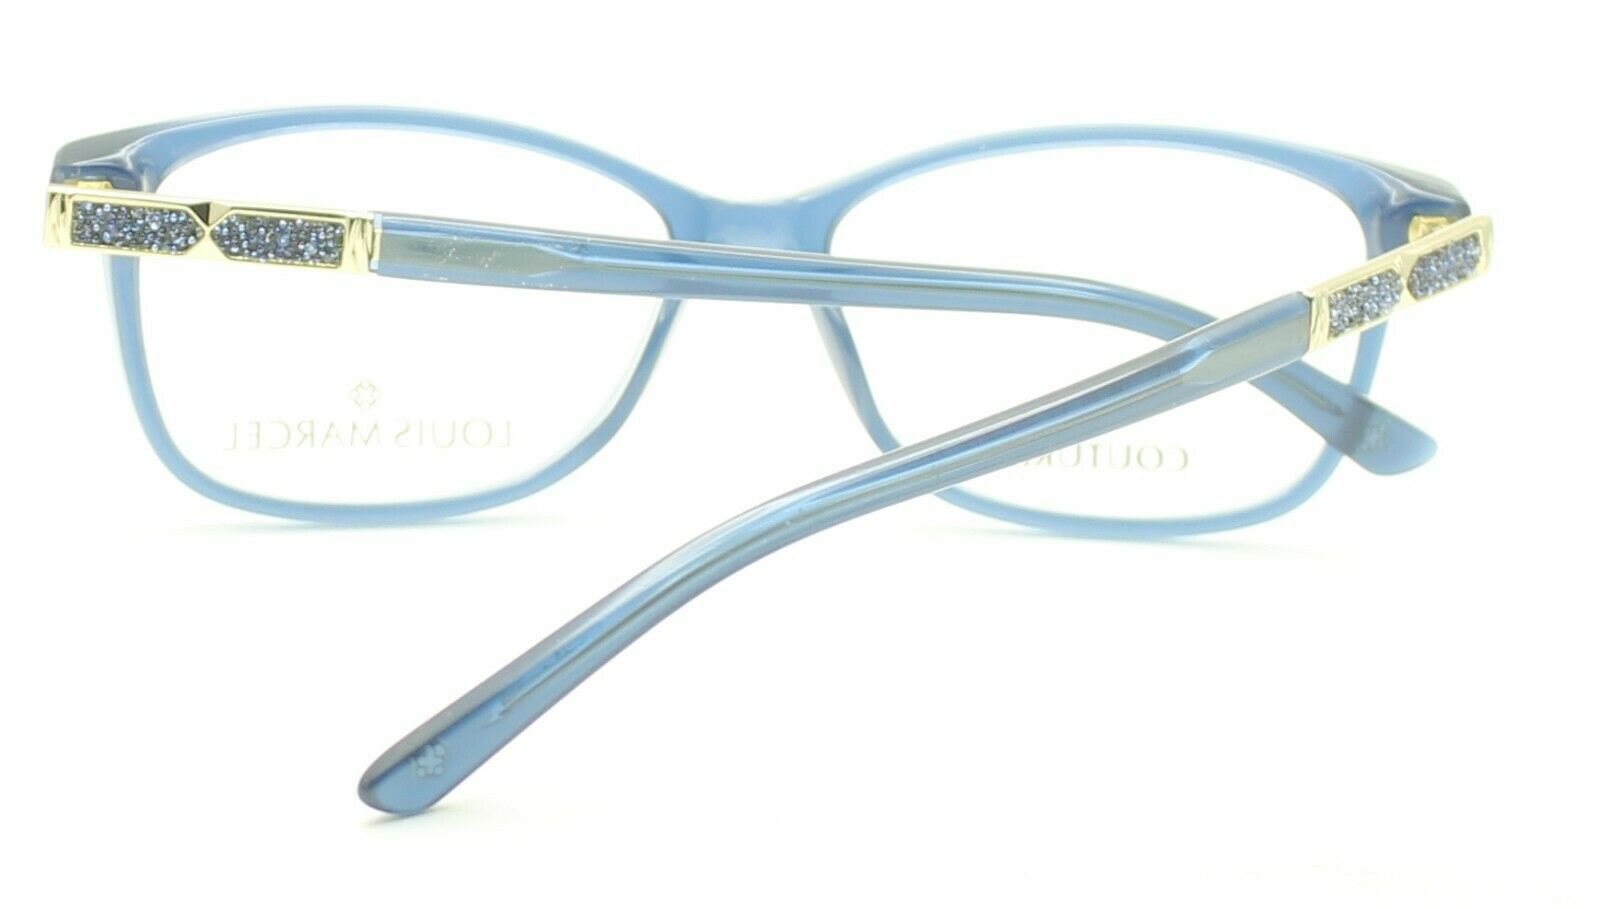 LOUIS MARCEL LMC207 C1 53mm Eyewear FRAMES RX Optical Eyeglasses